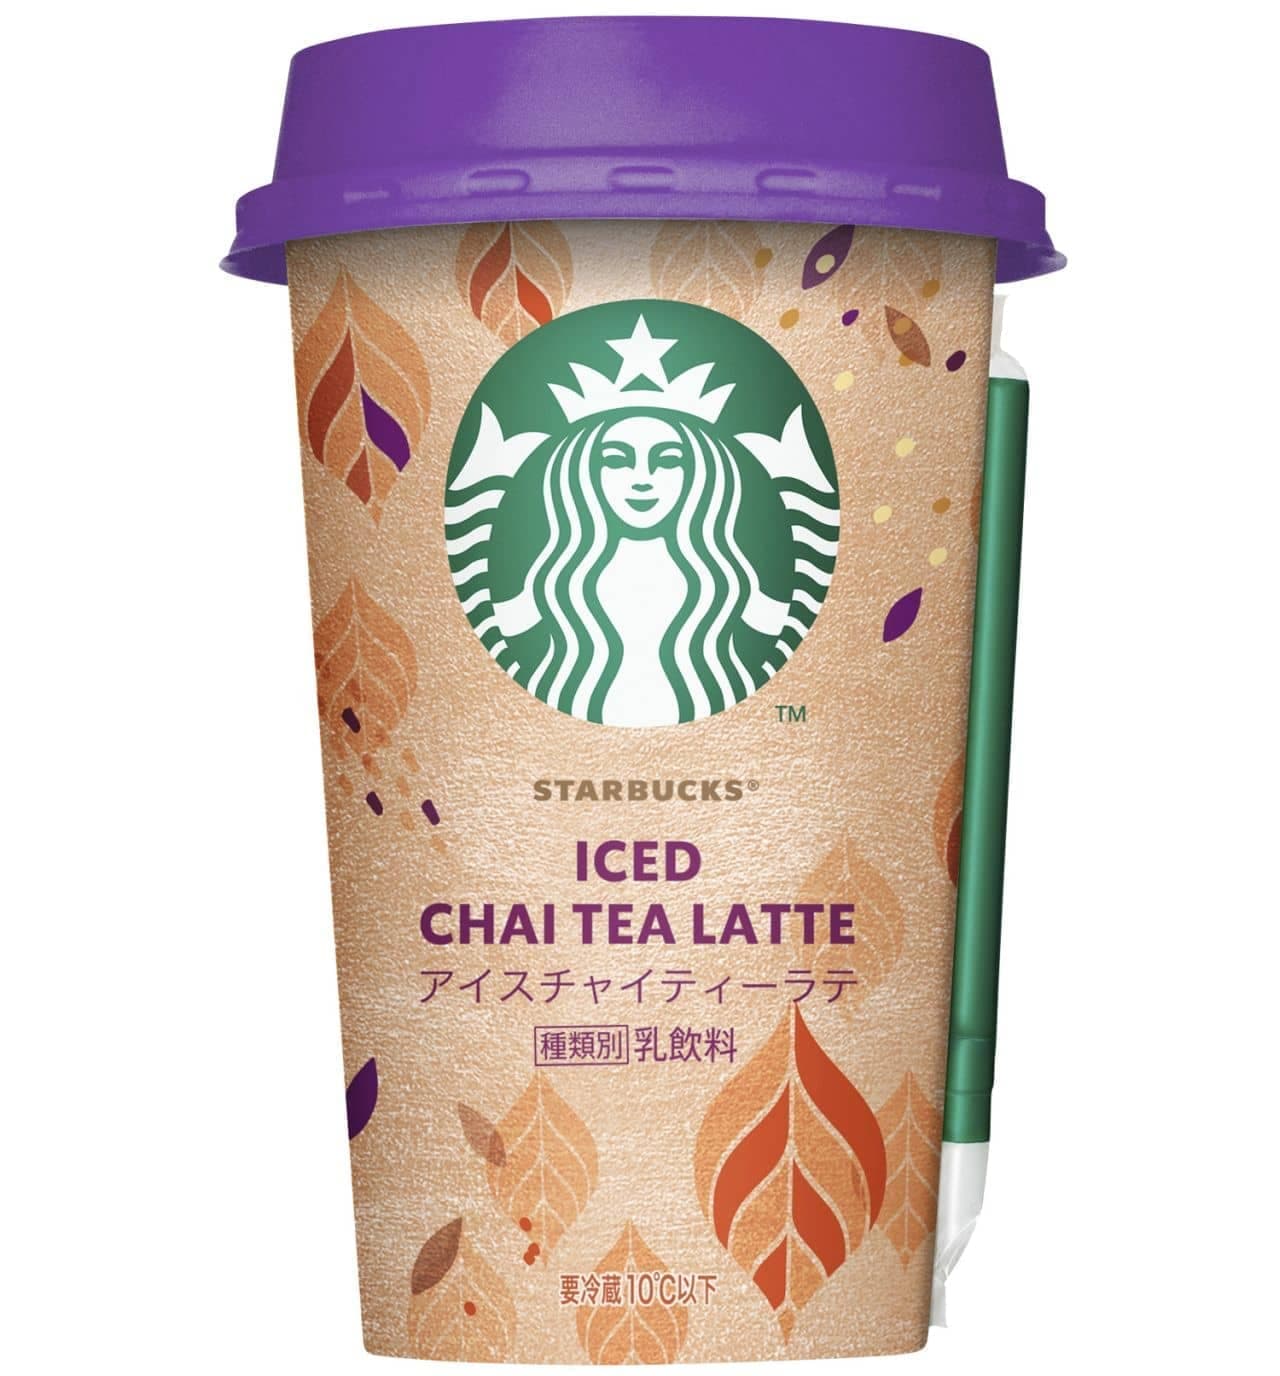 Starbucks Chilled Cup "Starbucks Ice Chai Tea Latte"